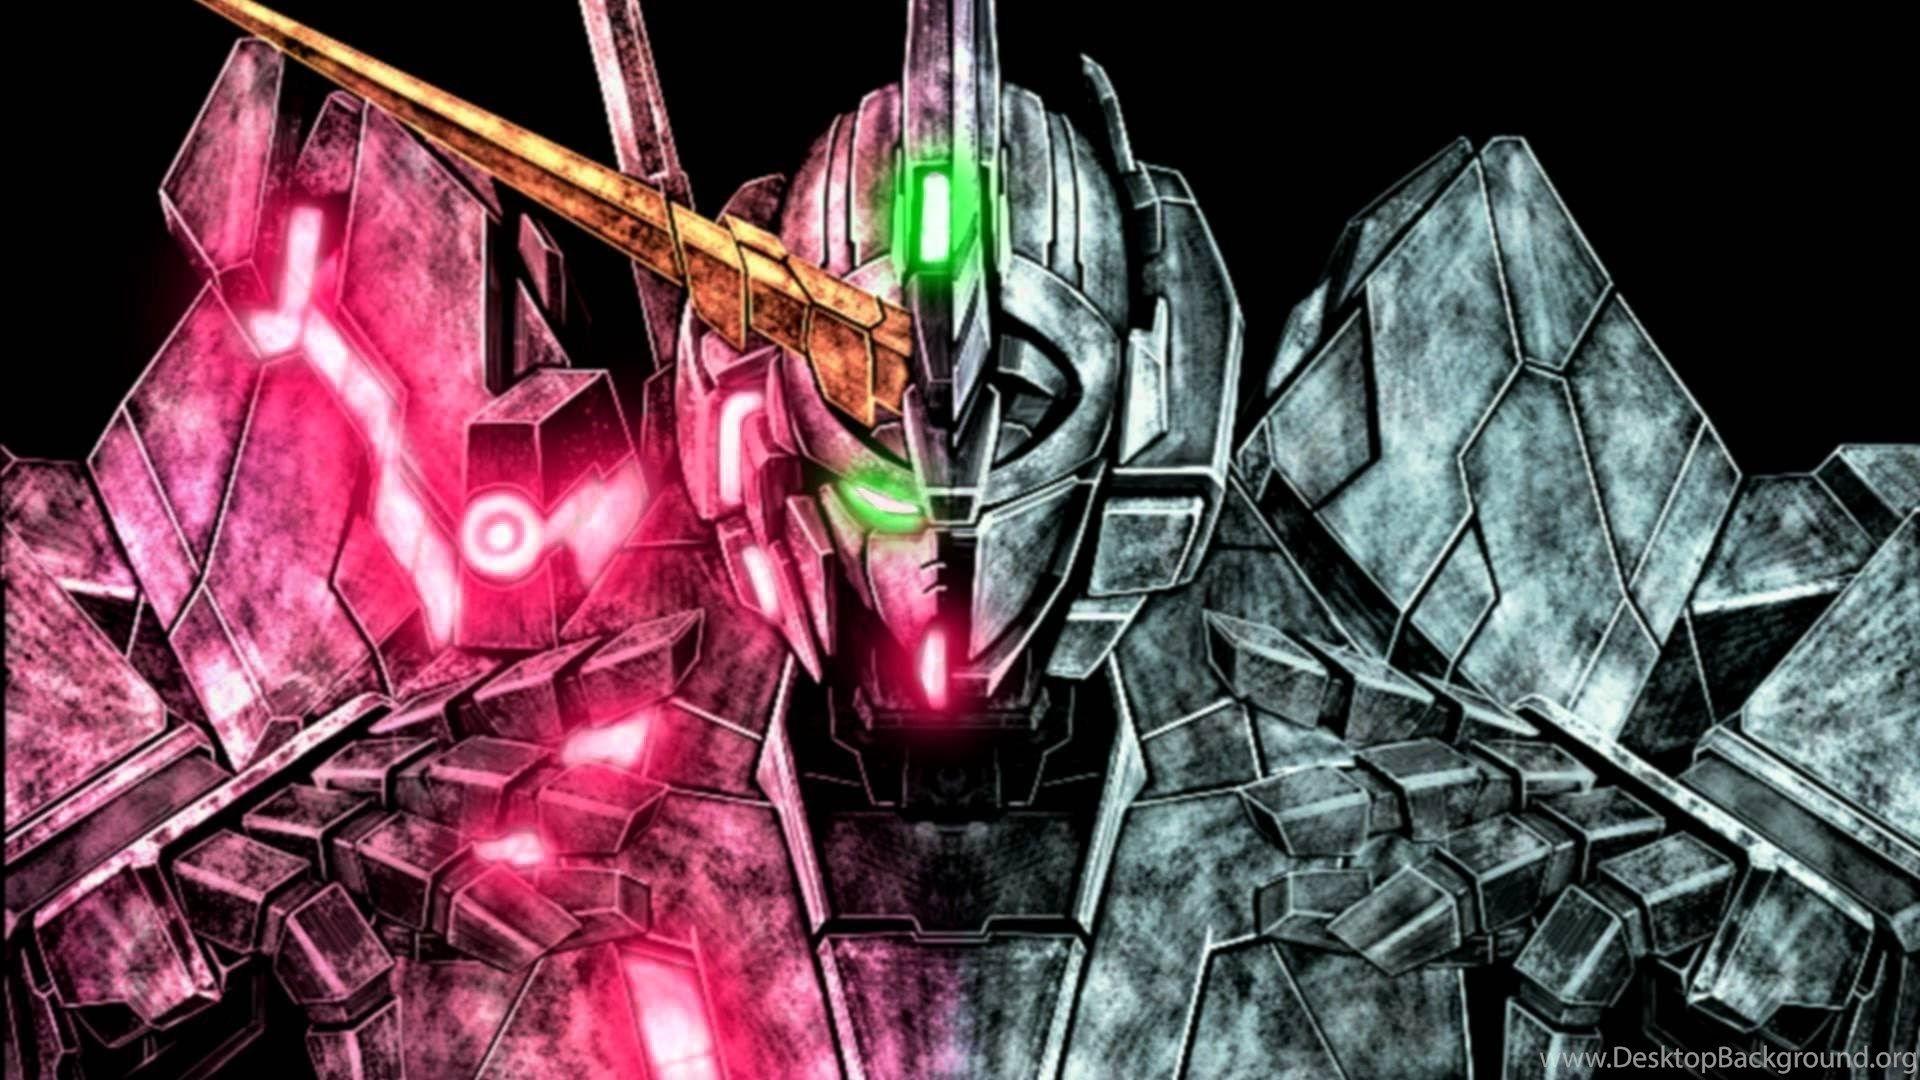 Gundam Unicorn Wallpapers Top Free Gundam Unicorn Backgrounds Wallpaperaccess